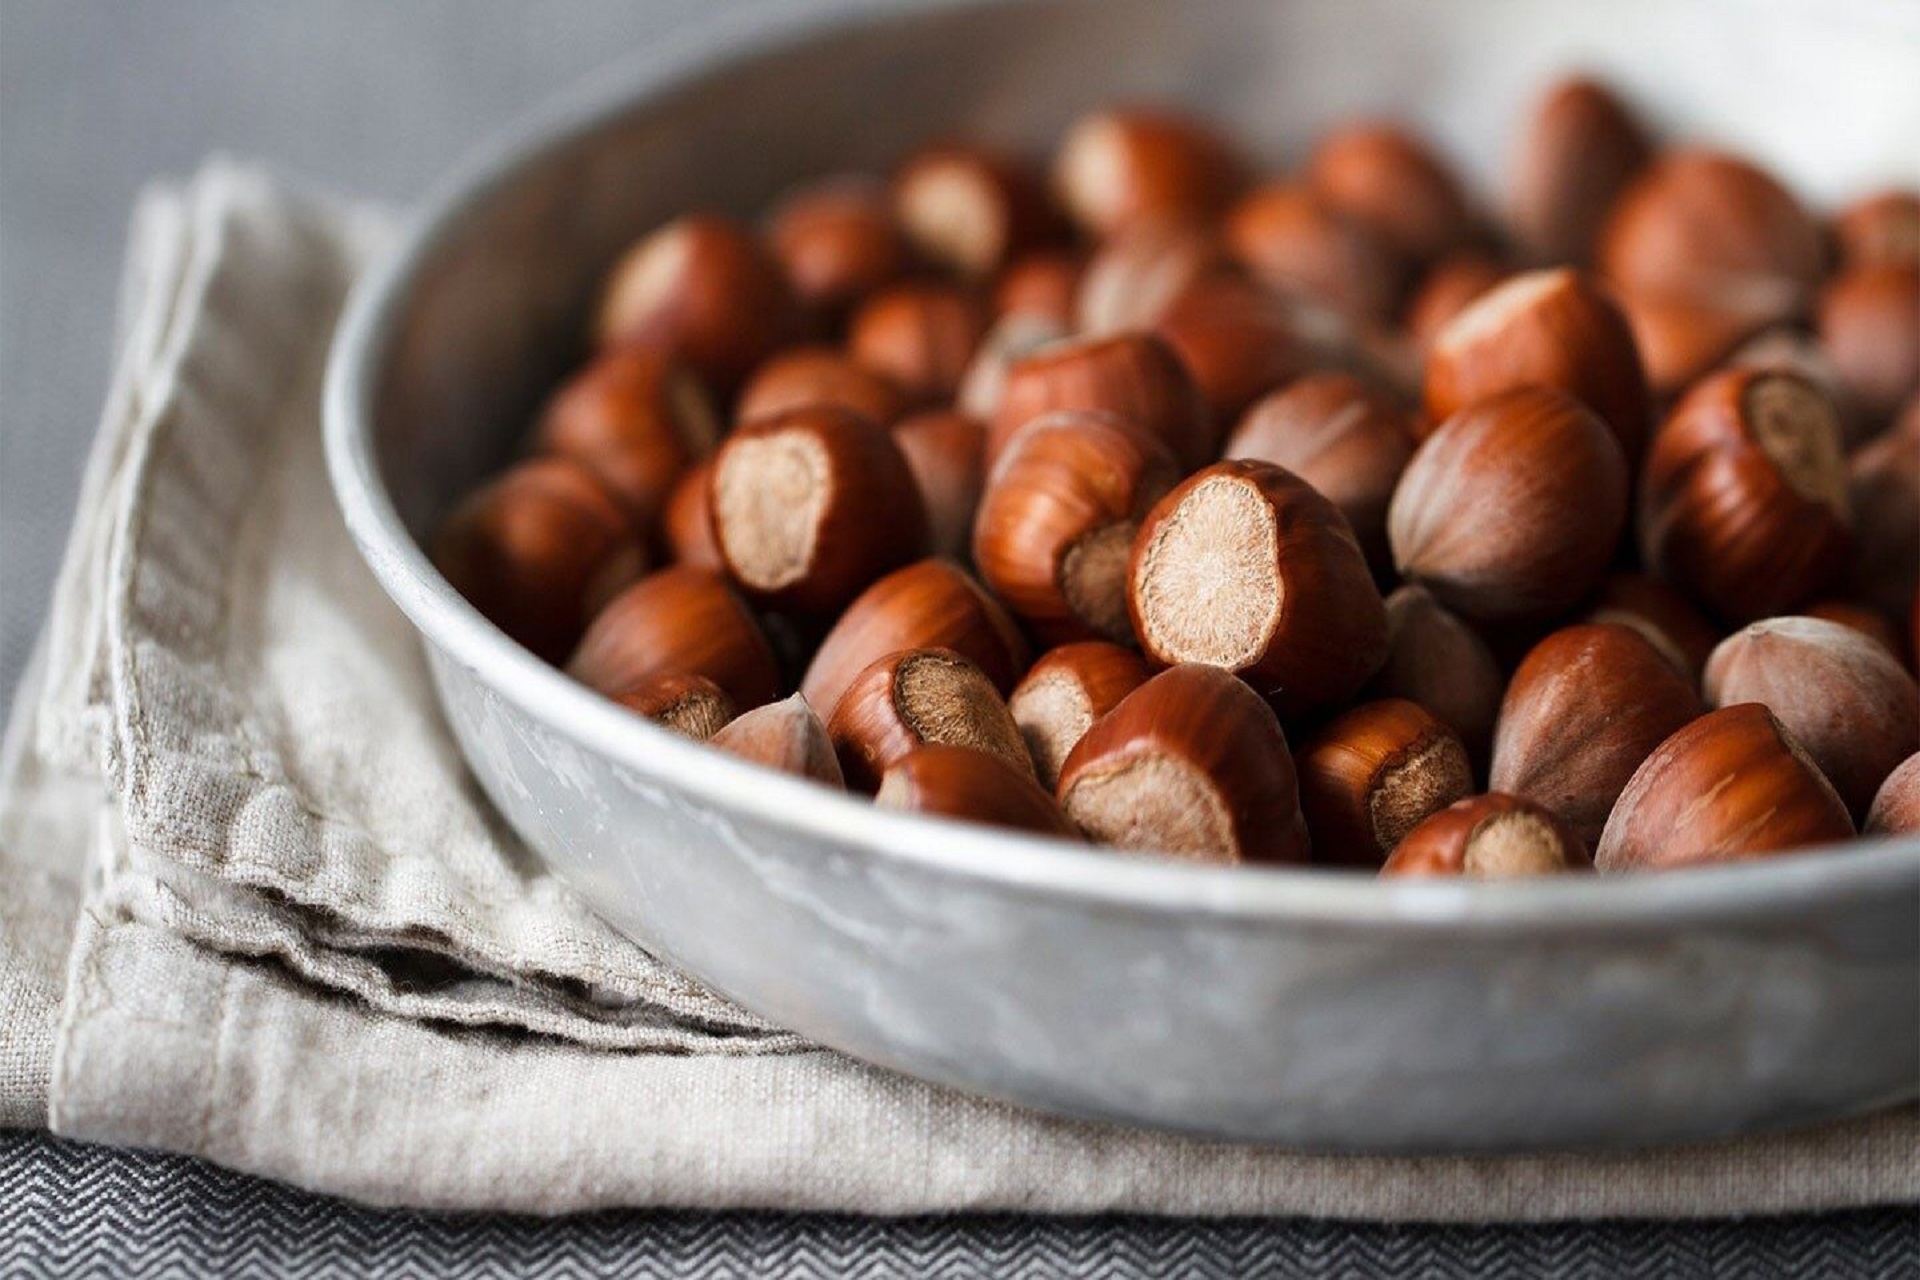 How to eat Hazelnuts